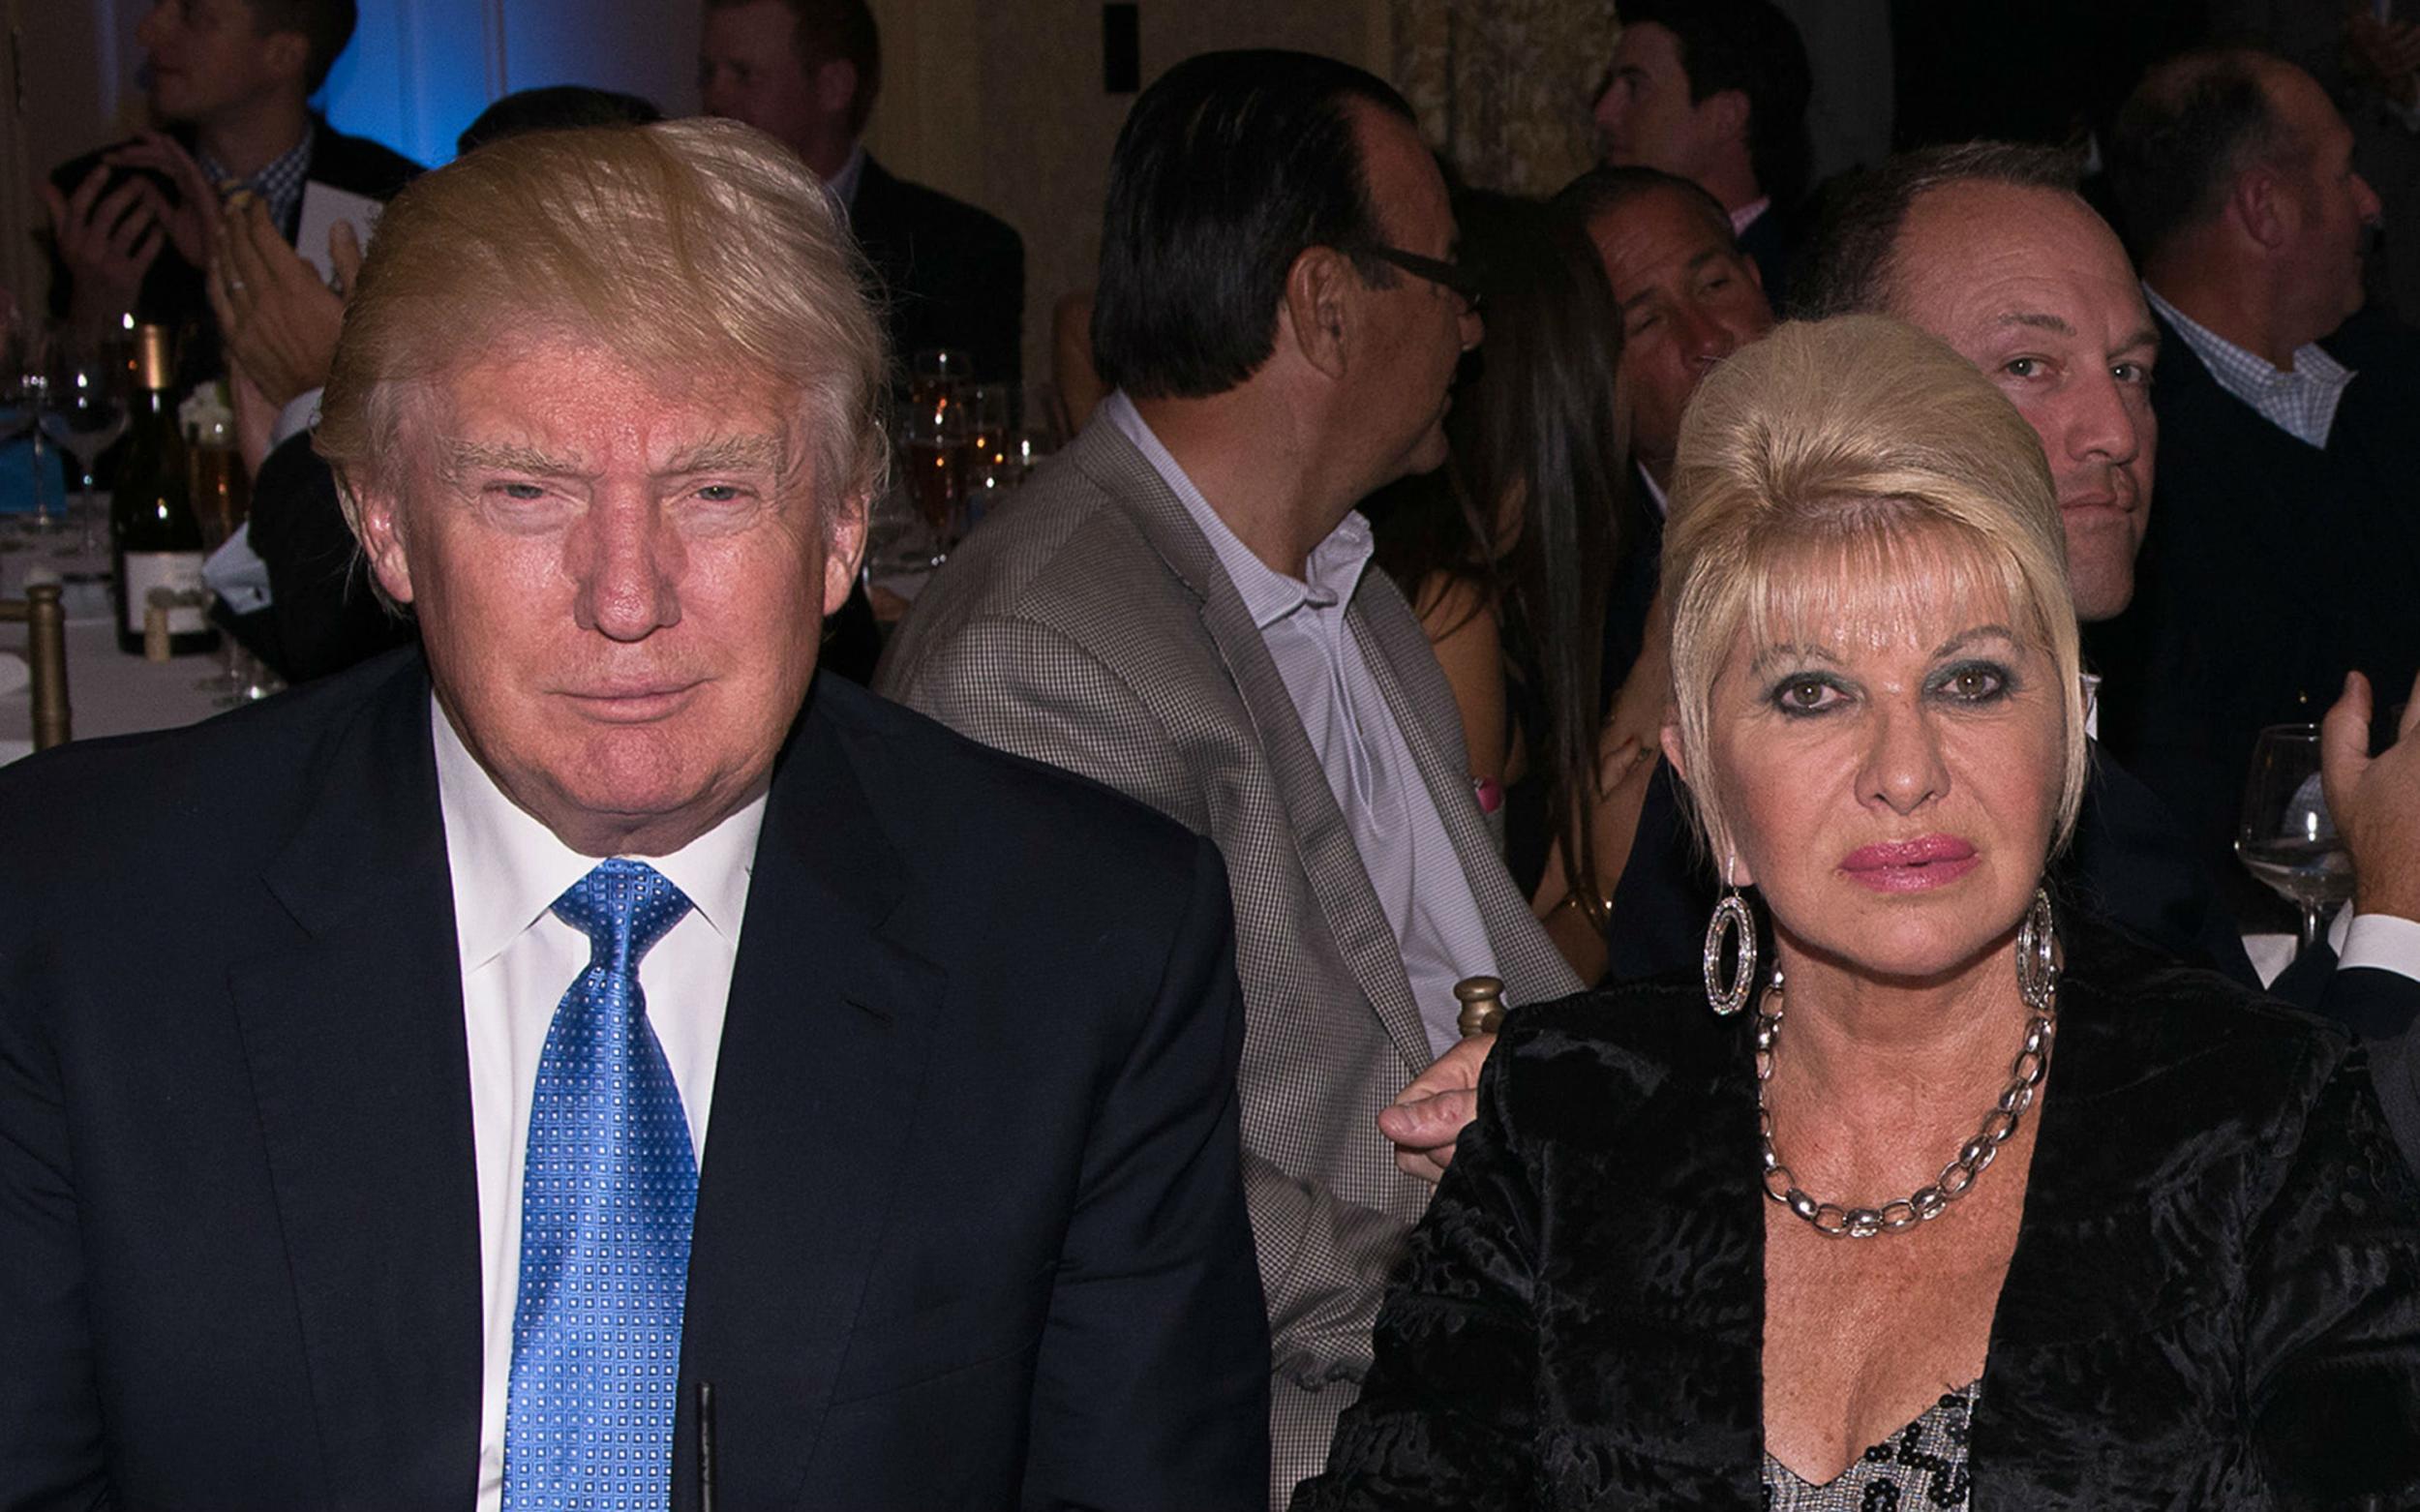 Mr Trump and Ivana Trump divorced in 1990